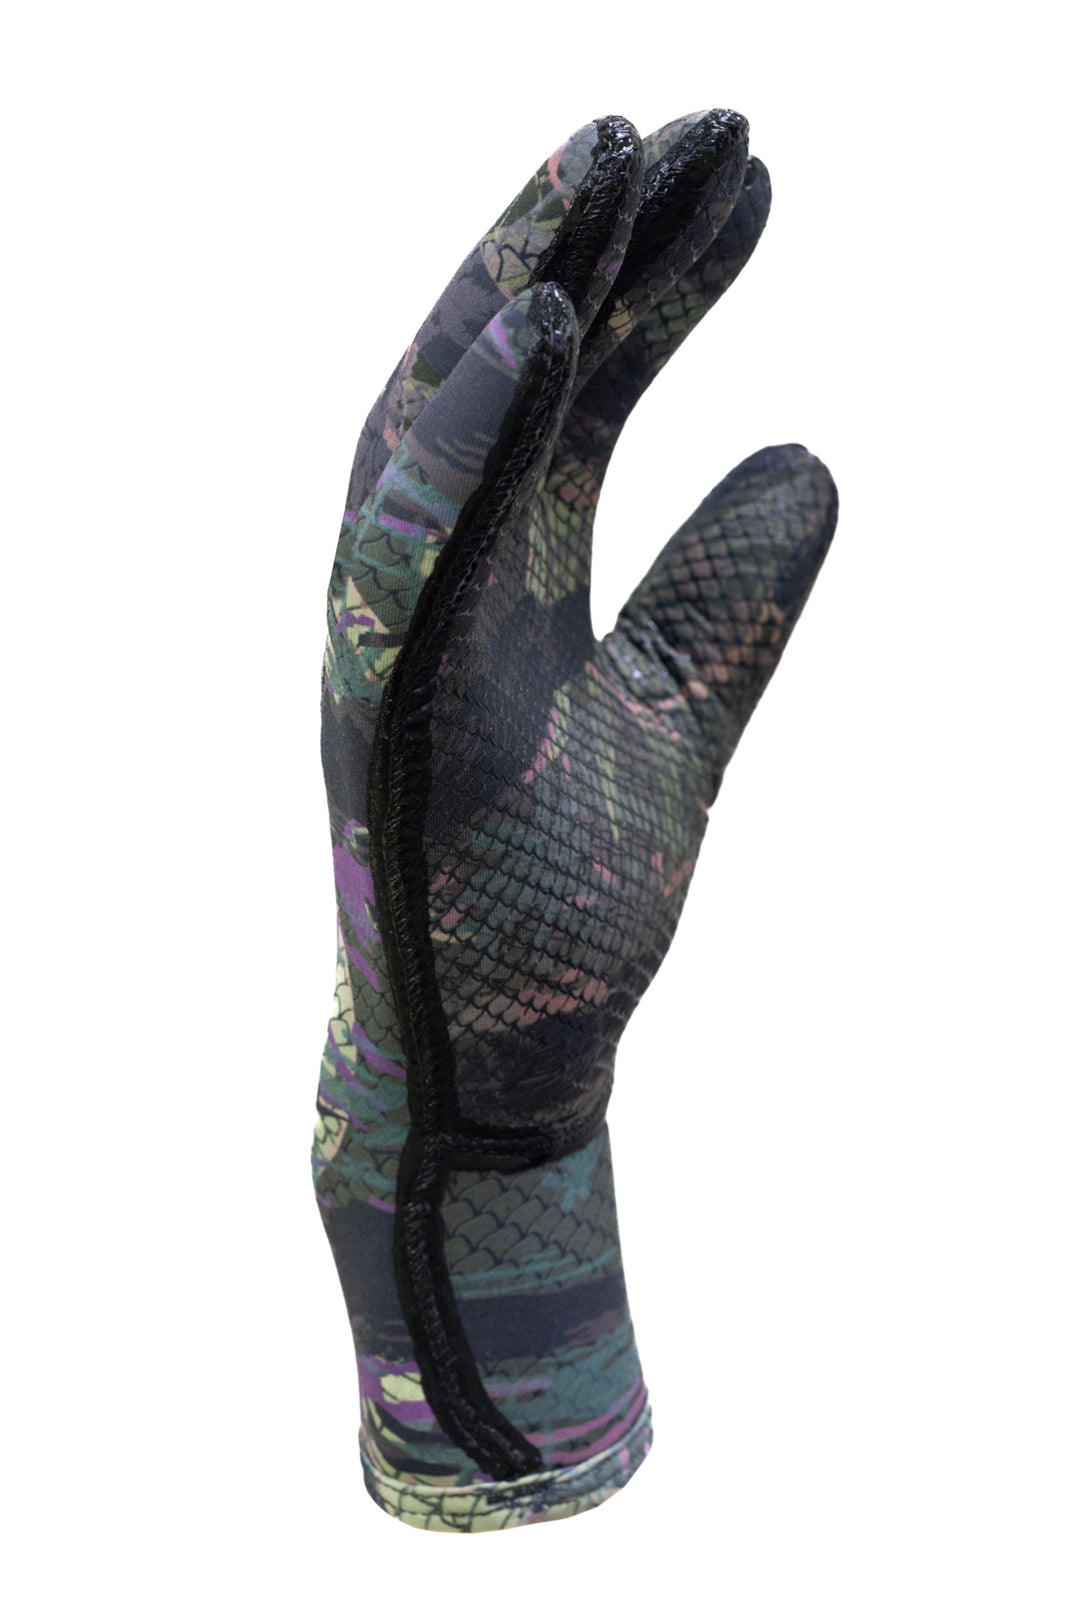 Unisex Tropicam Gloves